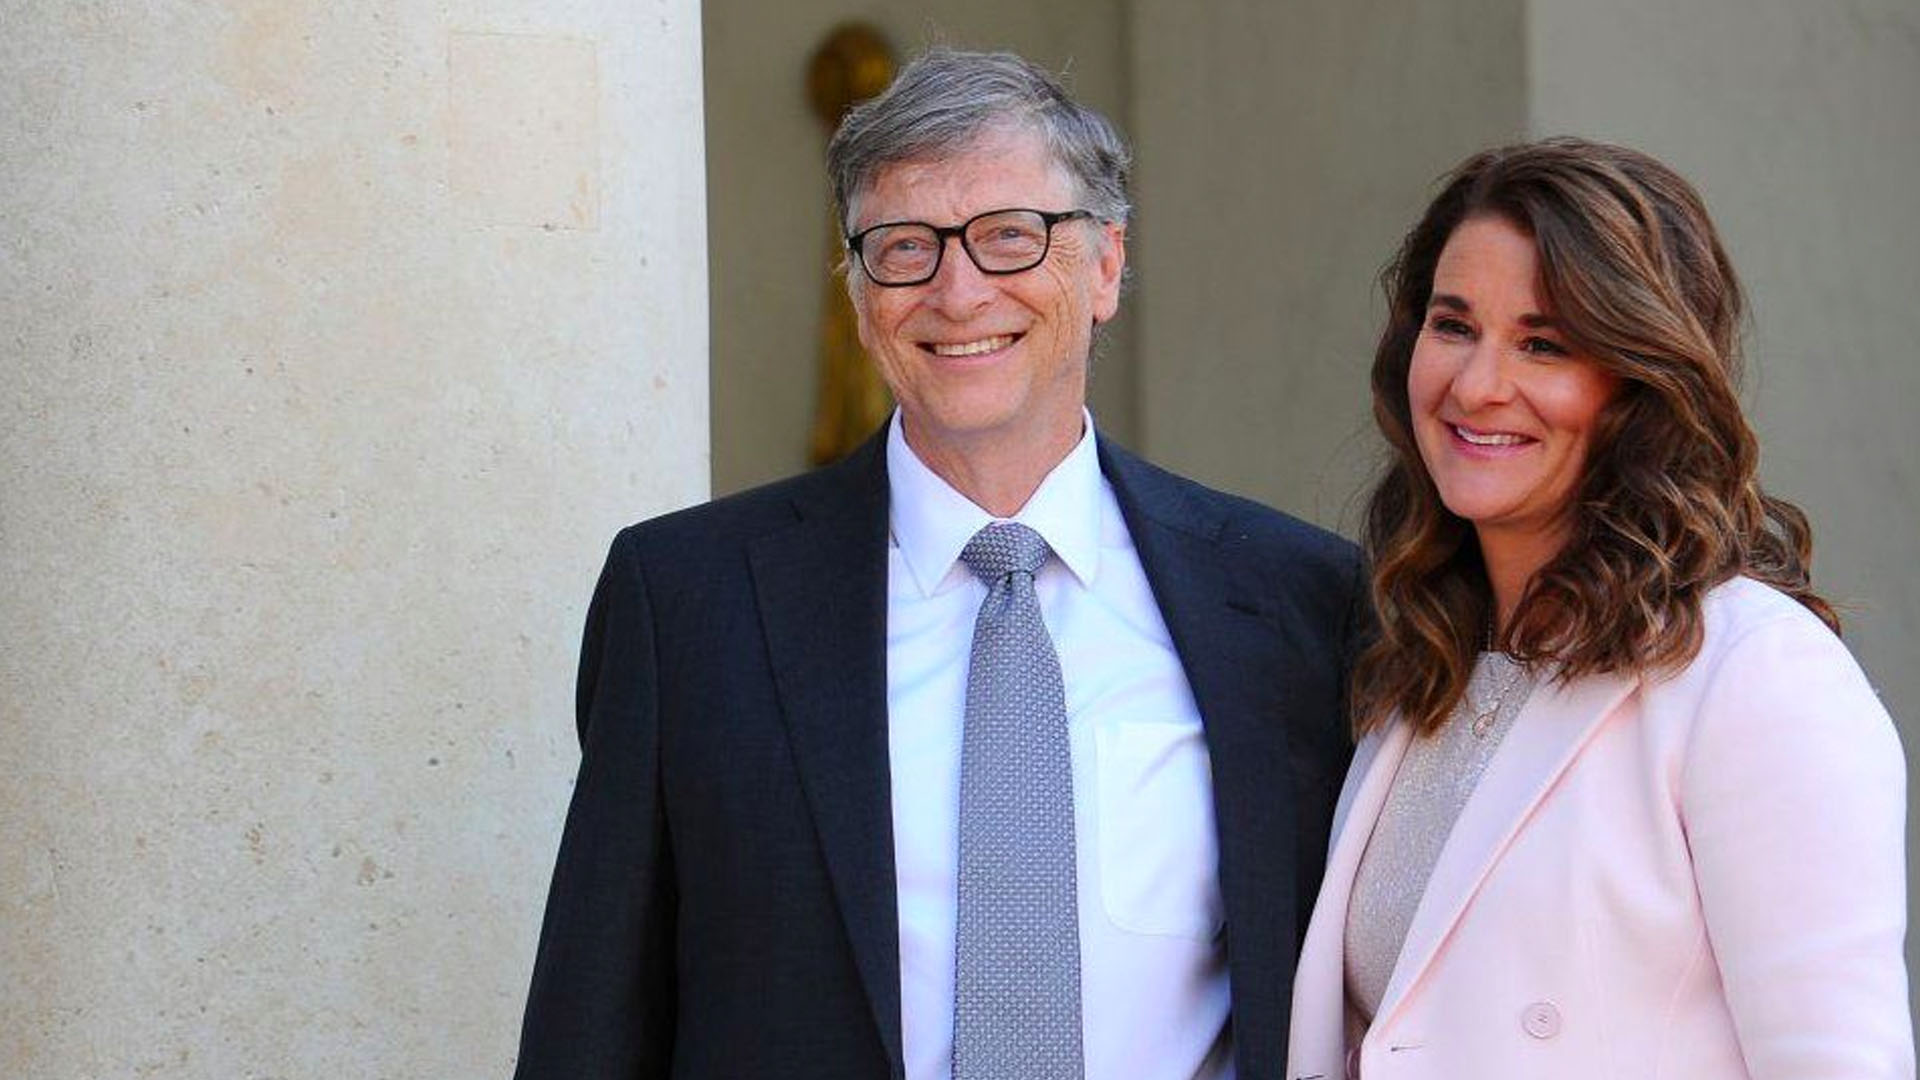 Bill Gates gives $1.8 Billion stocks to Melinda following divorce announcement